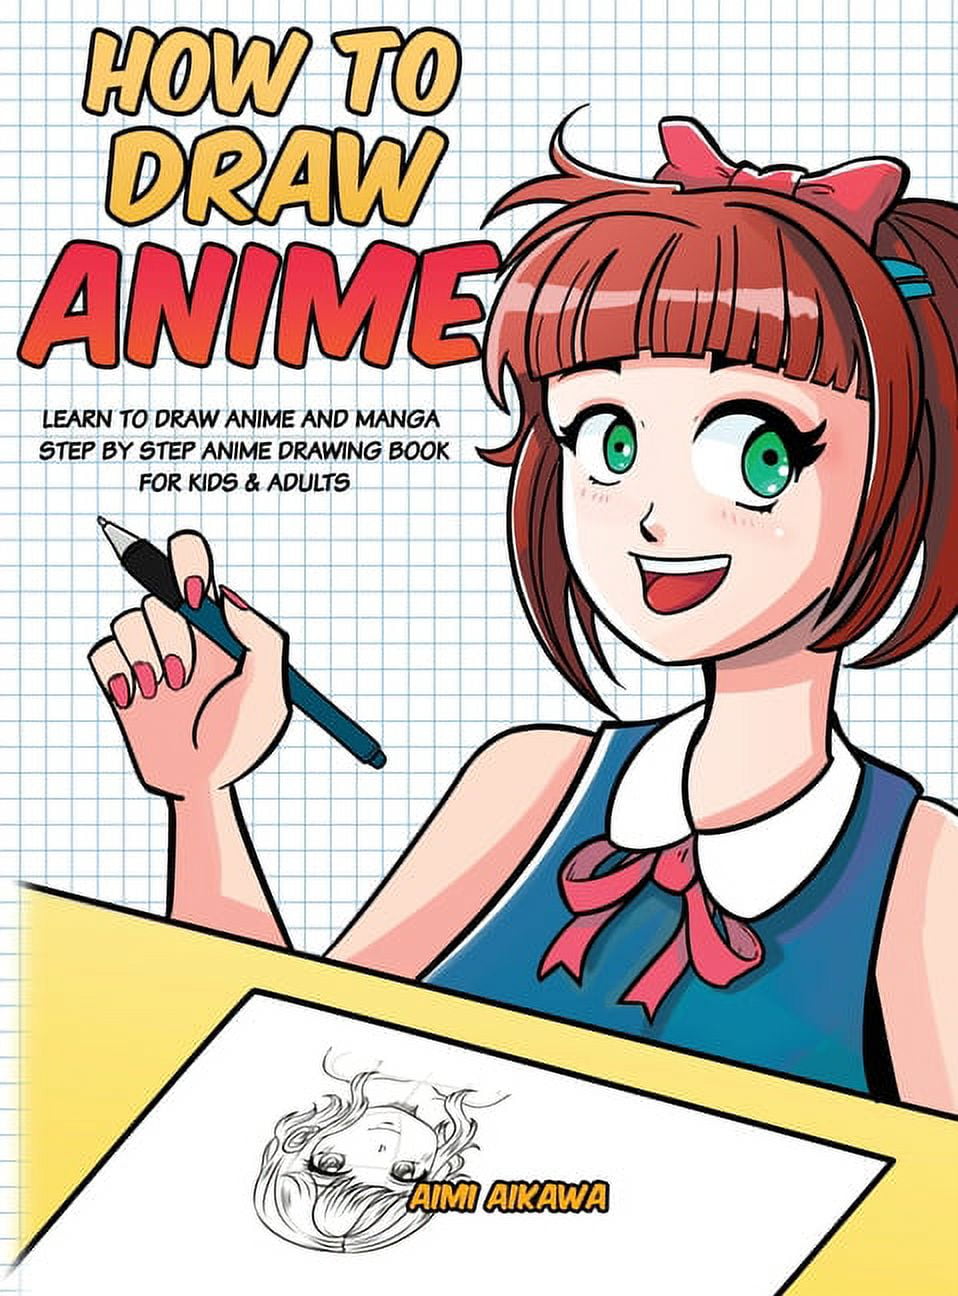 Anime Art Academy: Learn How to Draw Anime and Manga